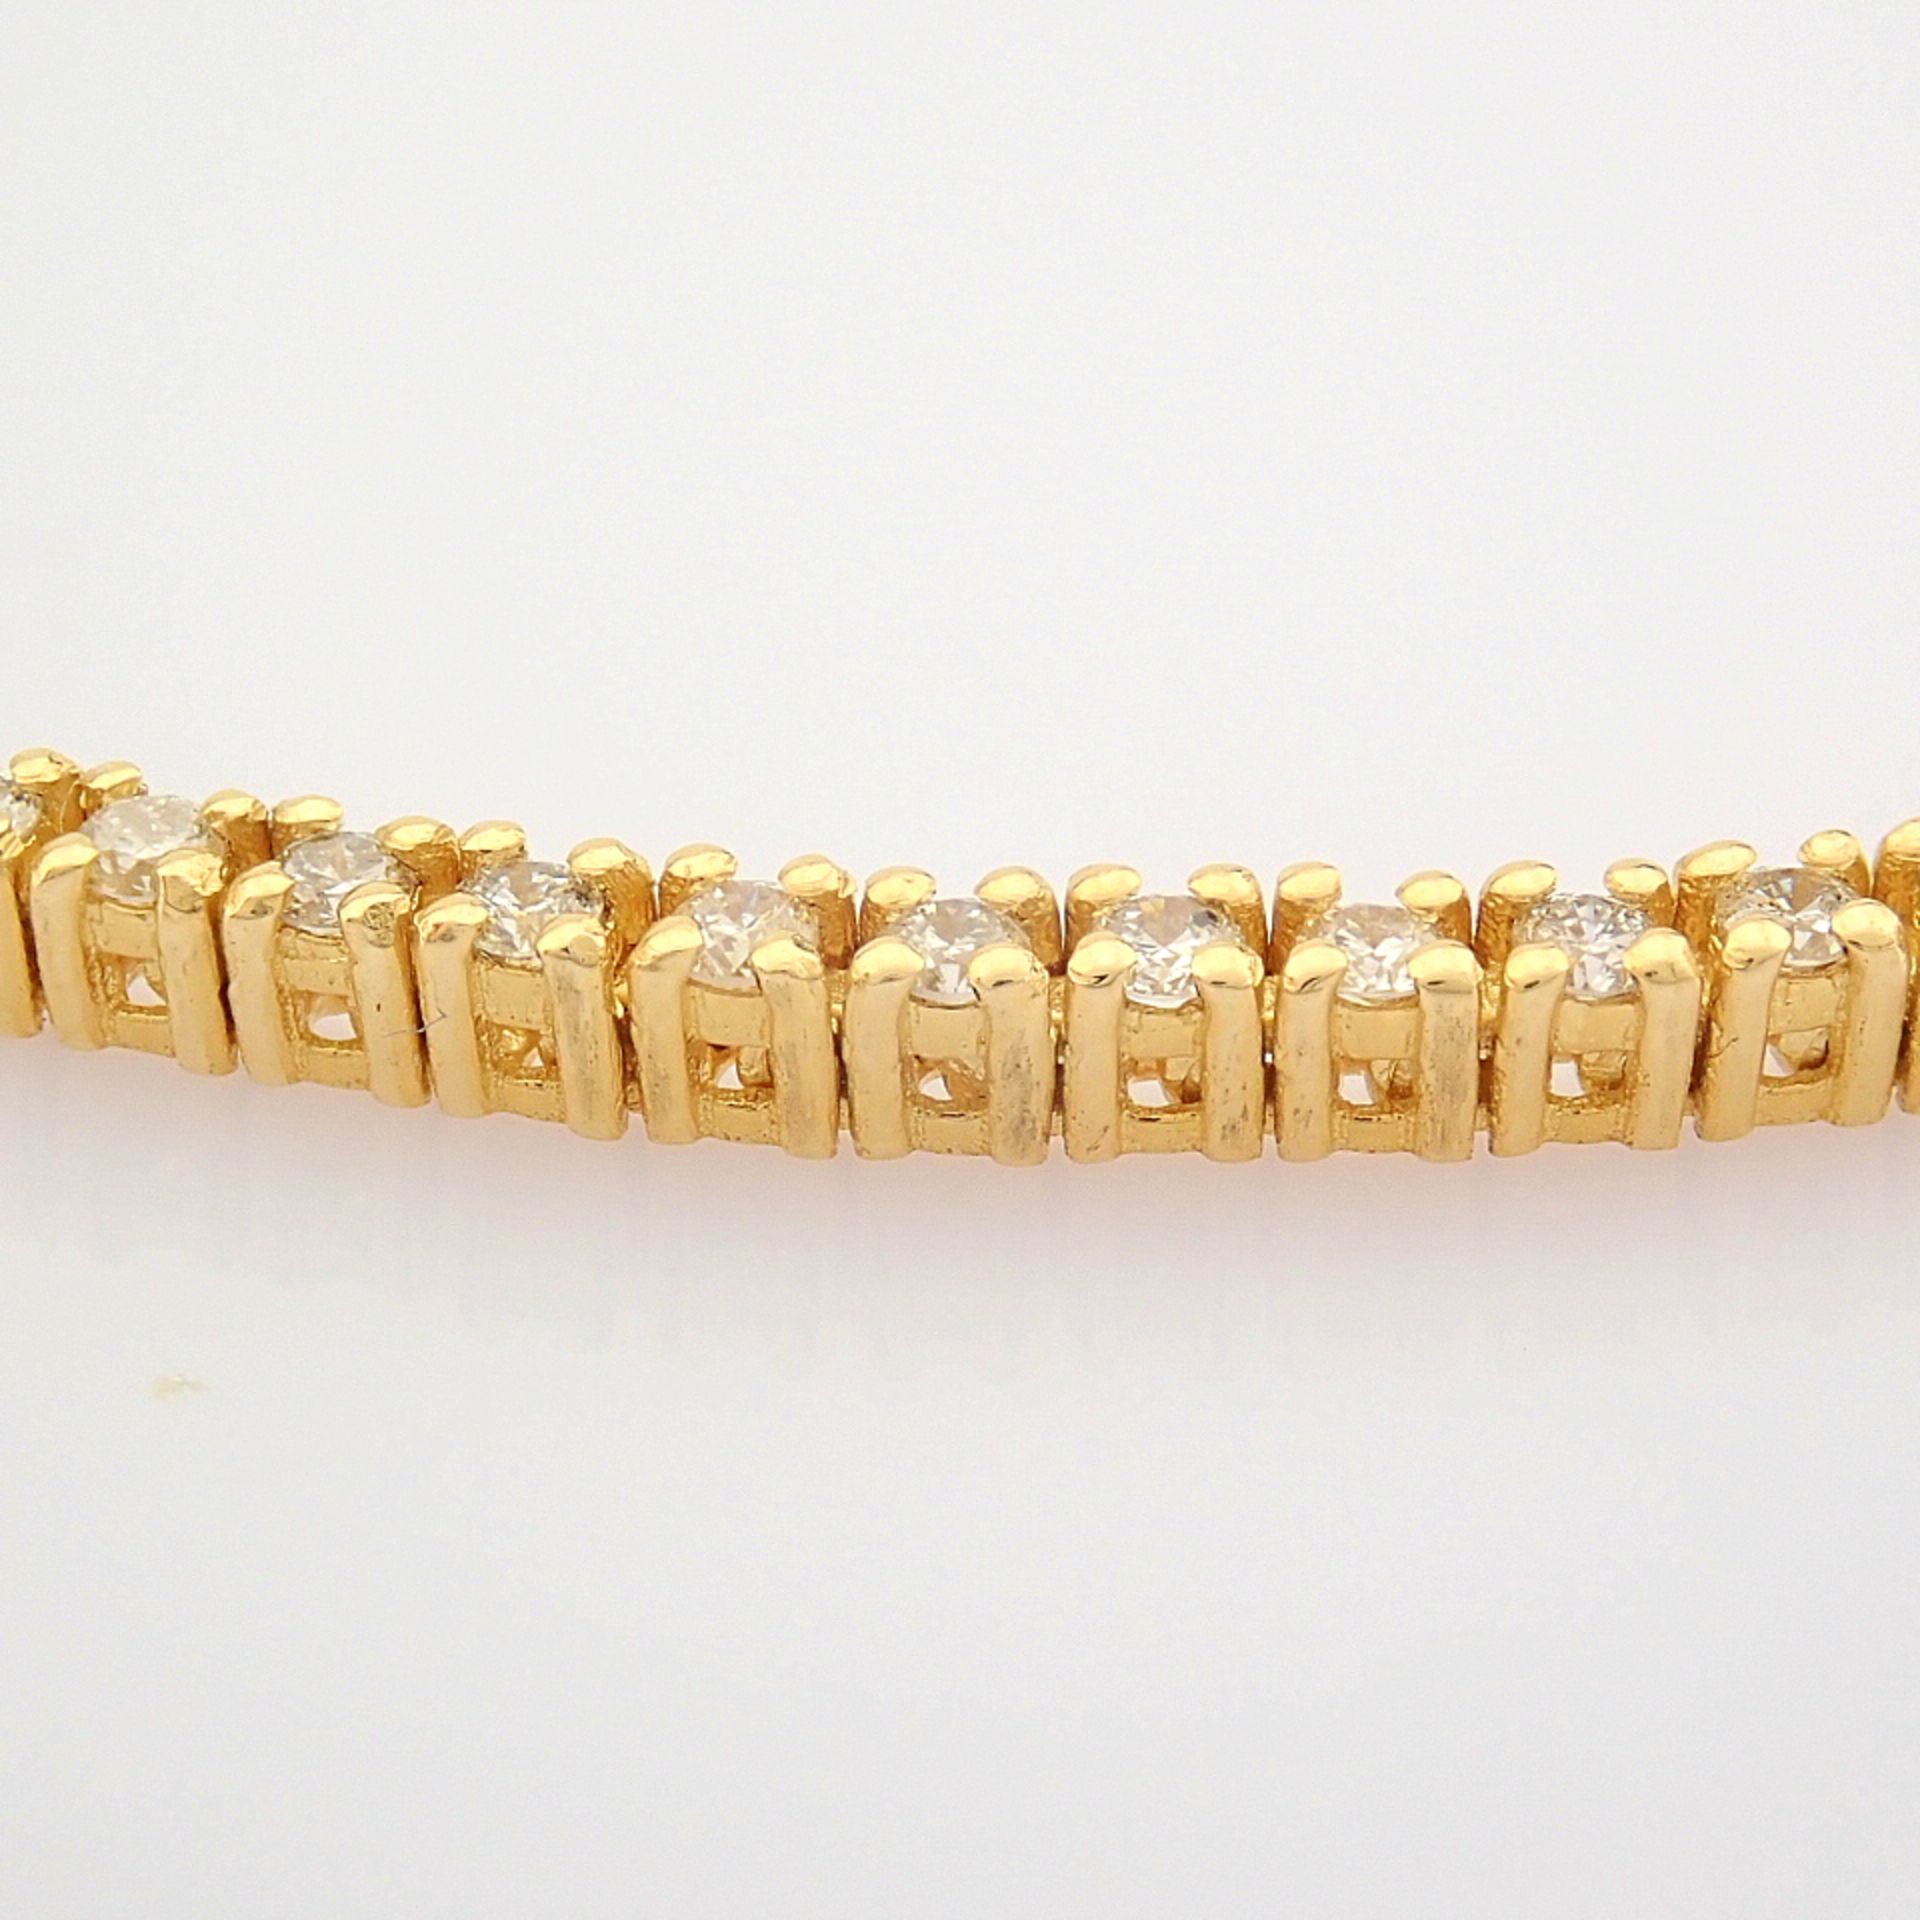 Certificated 14K Yellow Gold Diamond Bracelet - Image 4 of 10